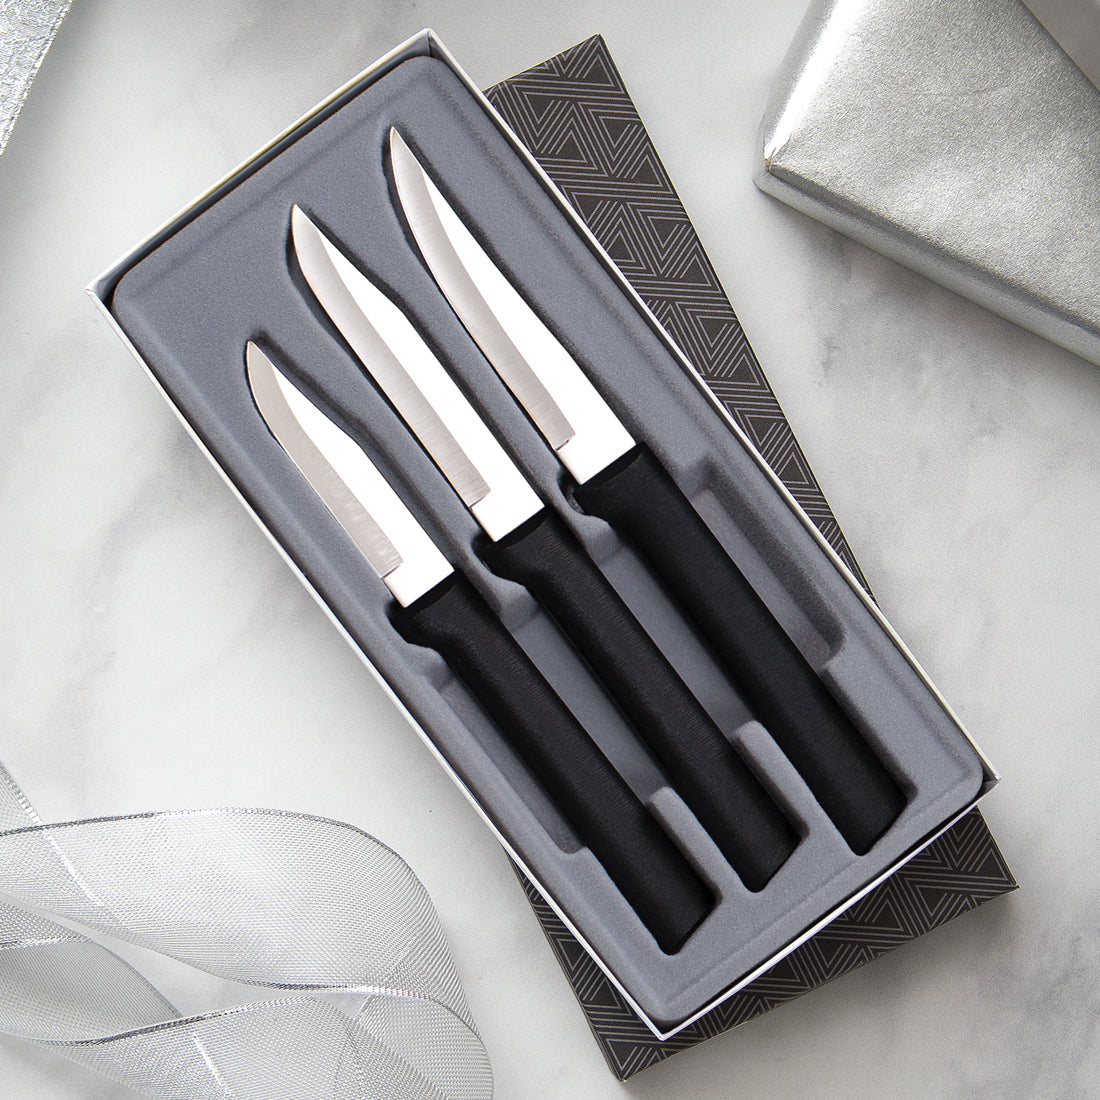 Rada Cutlery Utility Steak Knives Gift Set 6